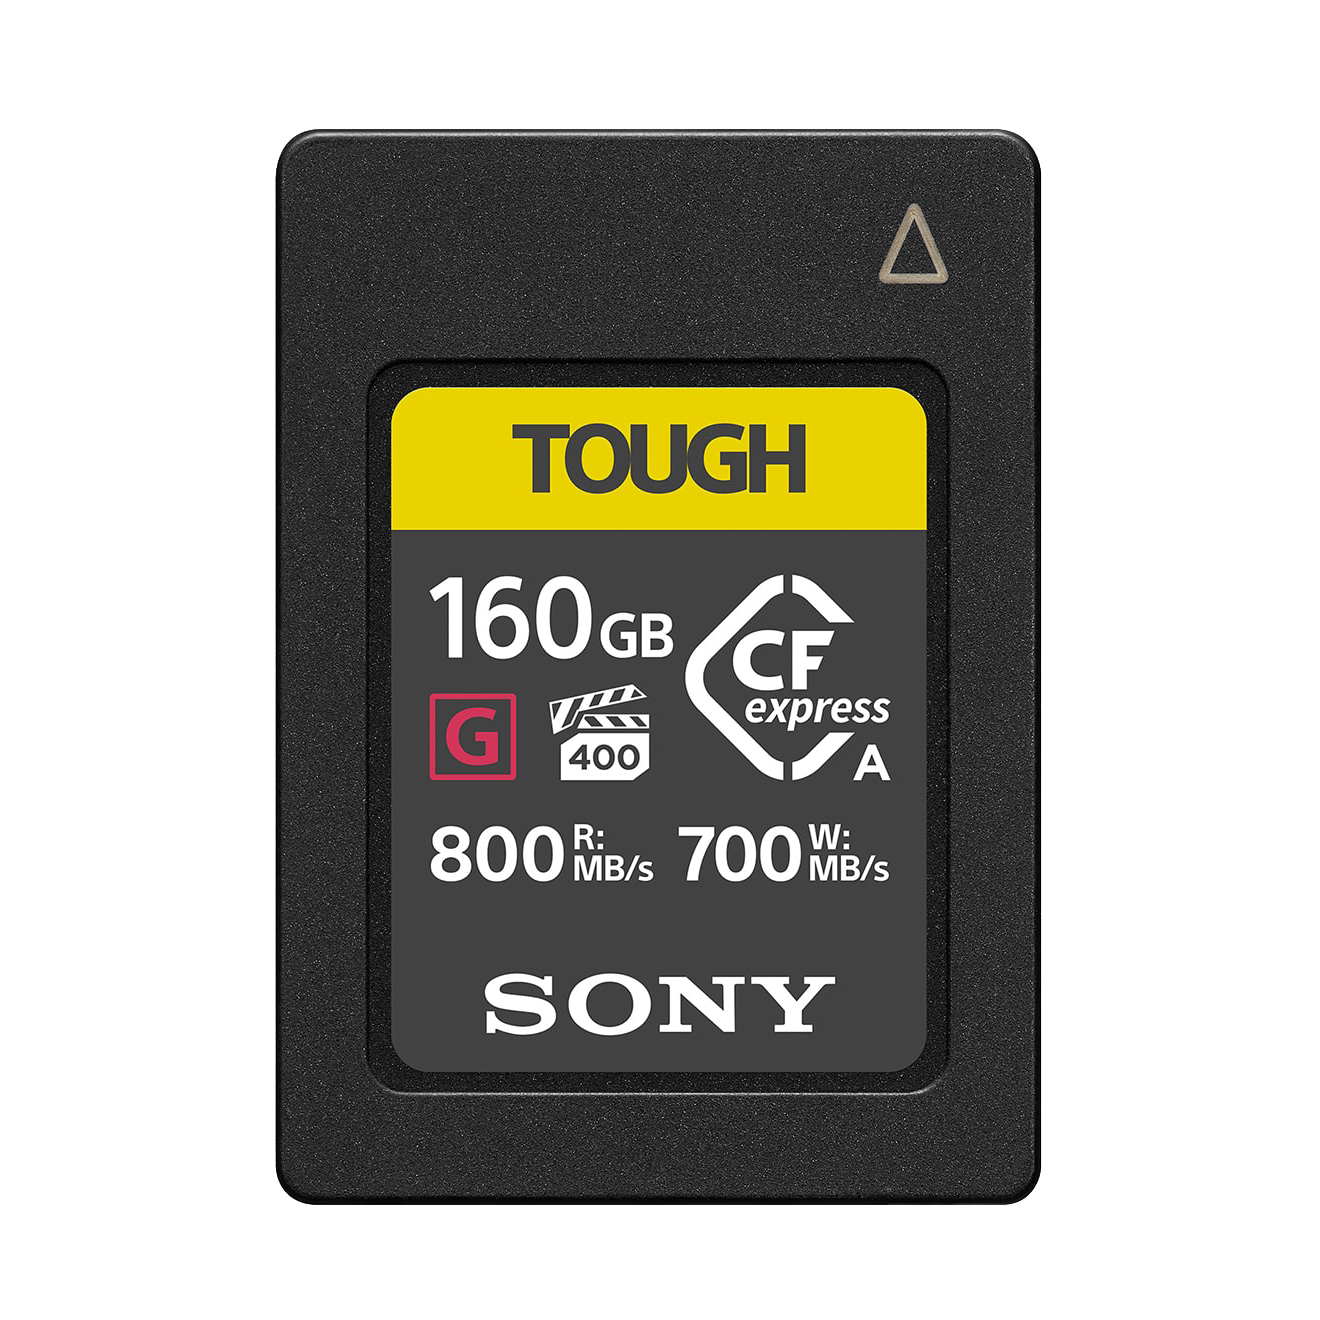 Карта памяти Cfexpress-A Sony TOUGH Type A 160GB